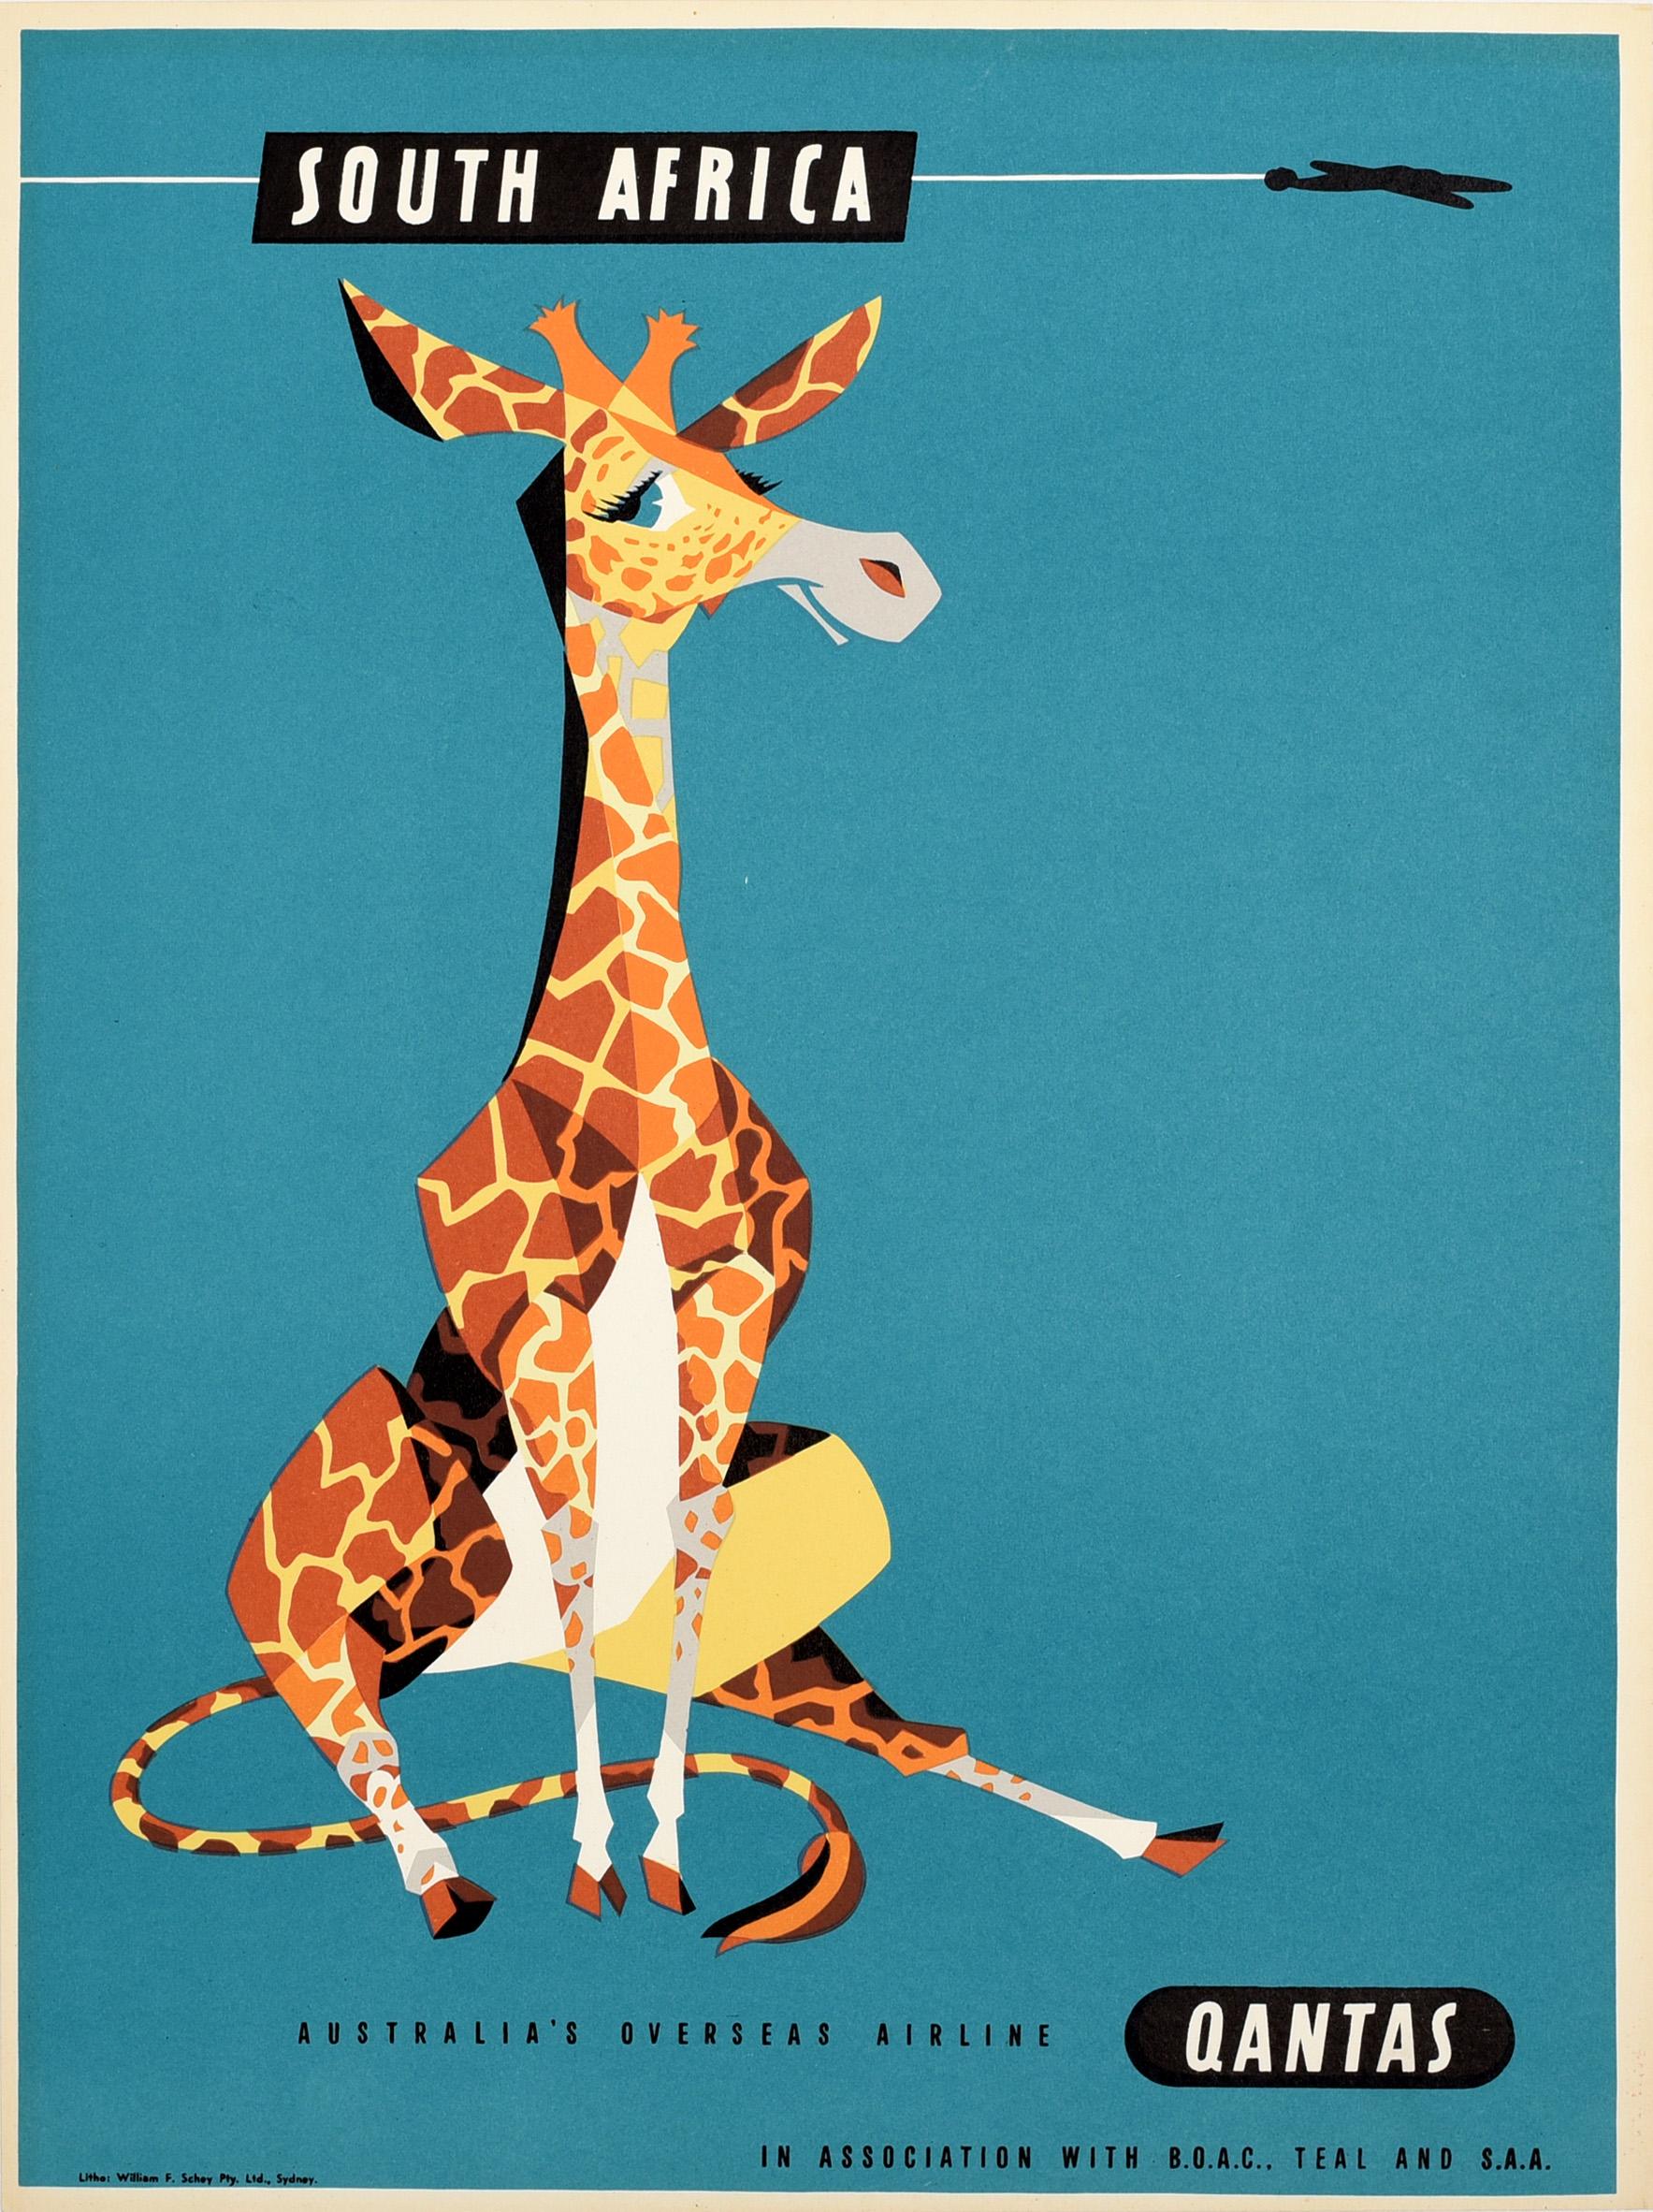 Harry Rogers Print - Original Vintage Travel Poster South Africa Qantas Airline BOAC TEAL SAA Giraffe